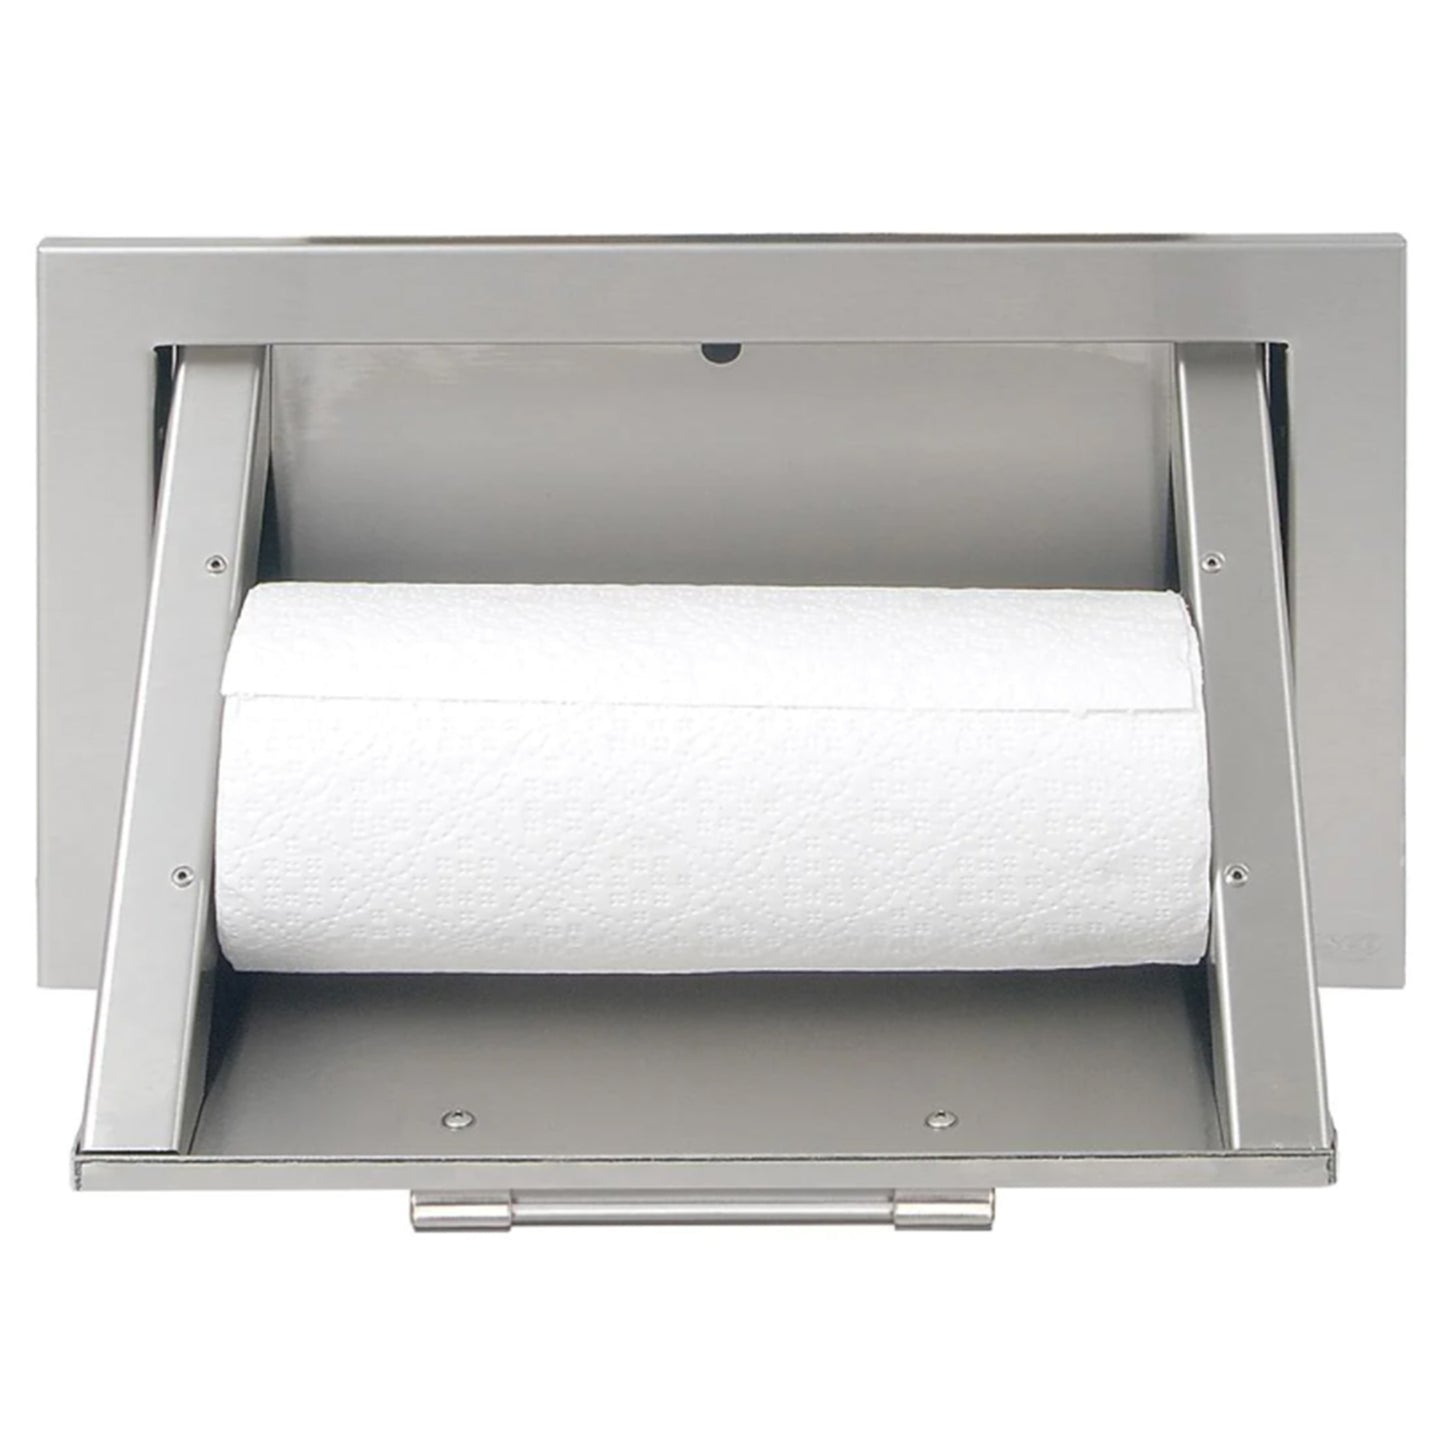 Alfresco 17-Inch Towel Holder